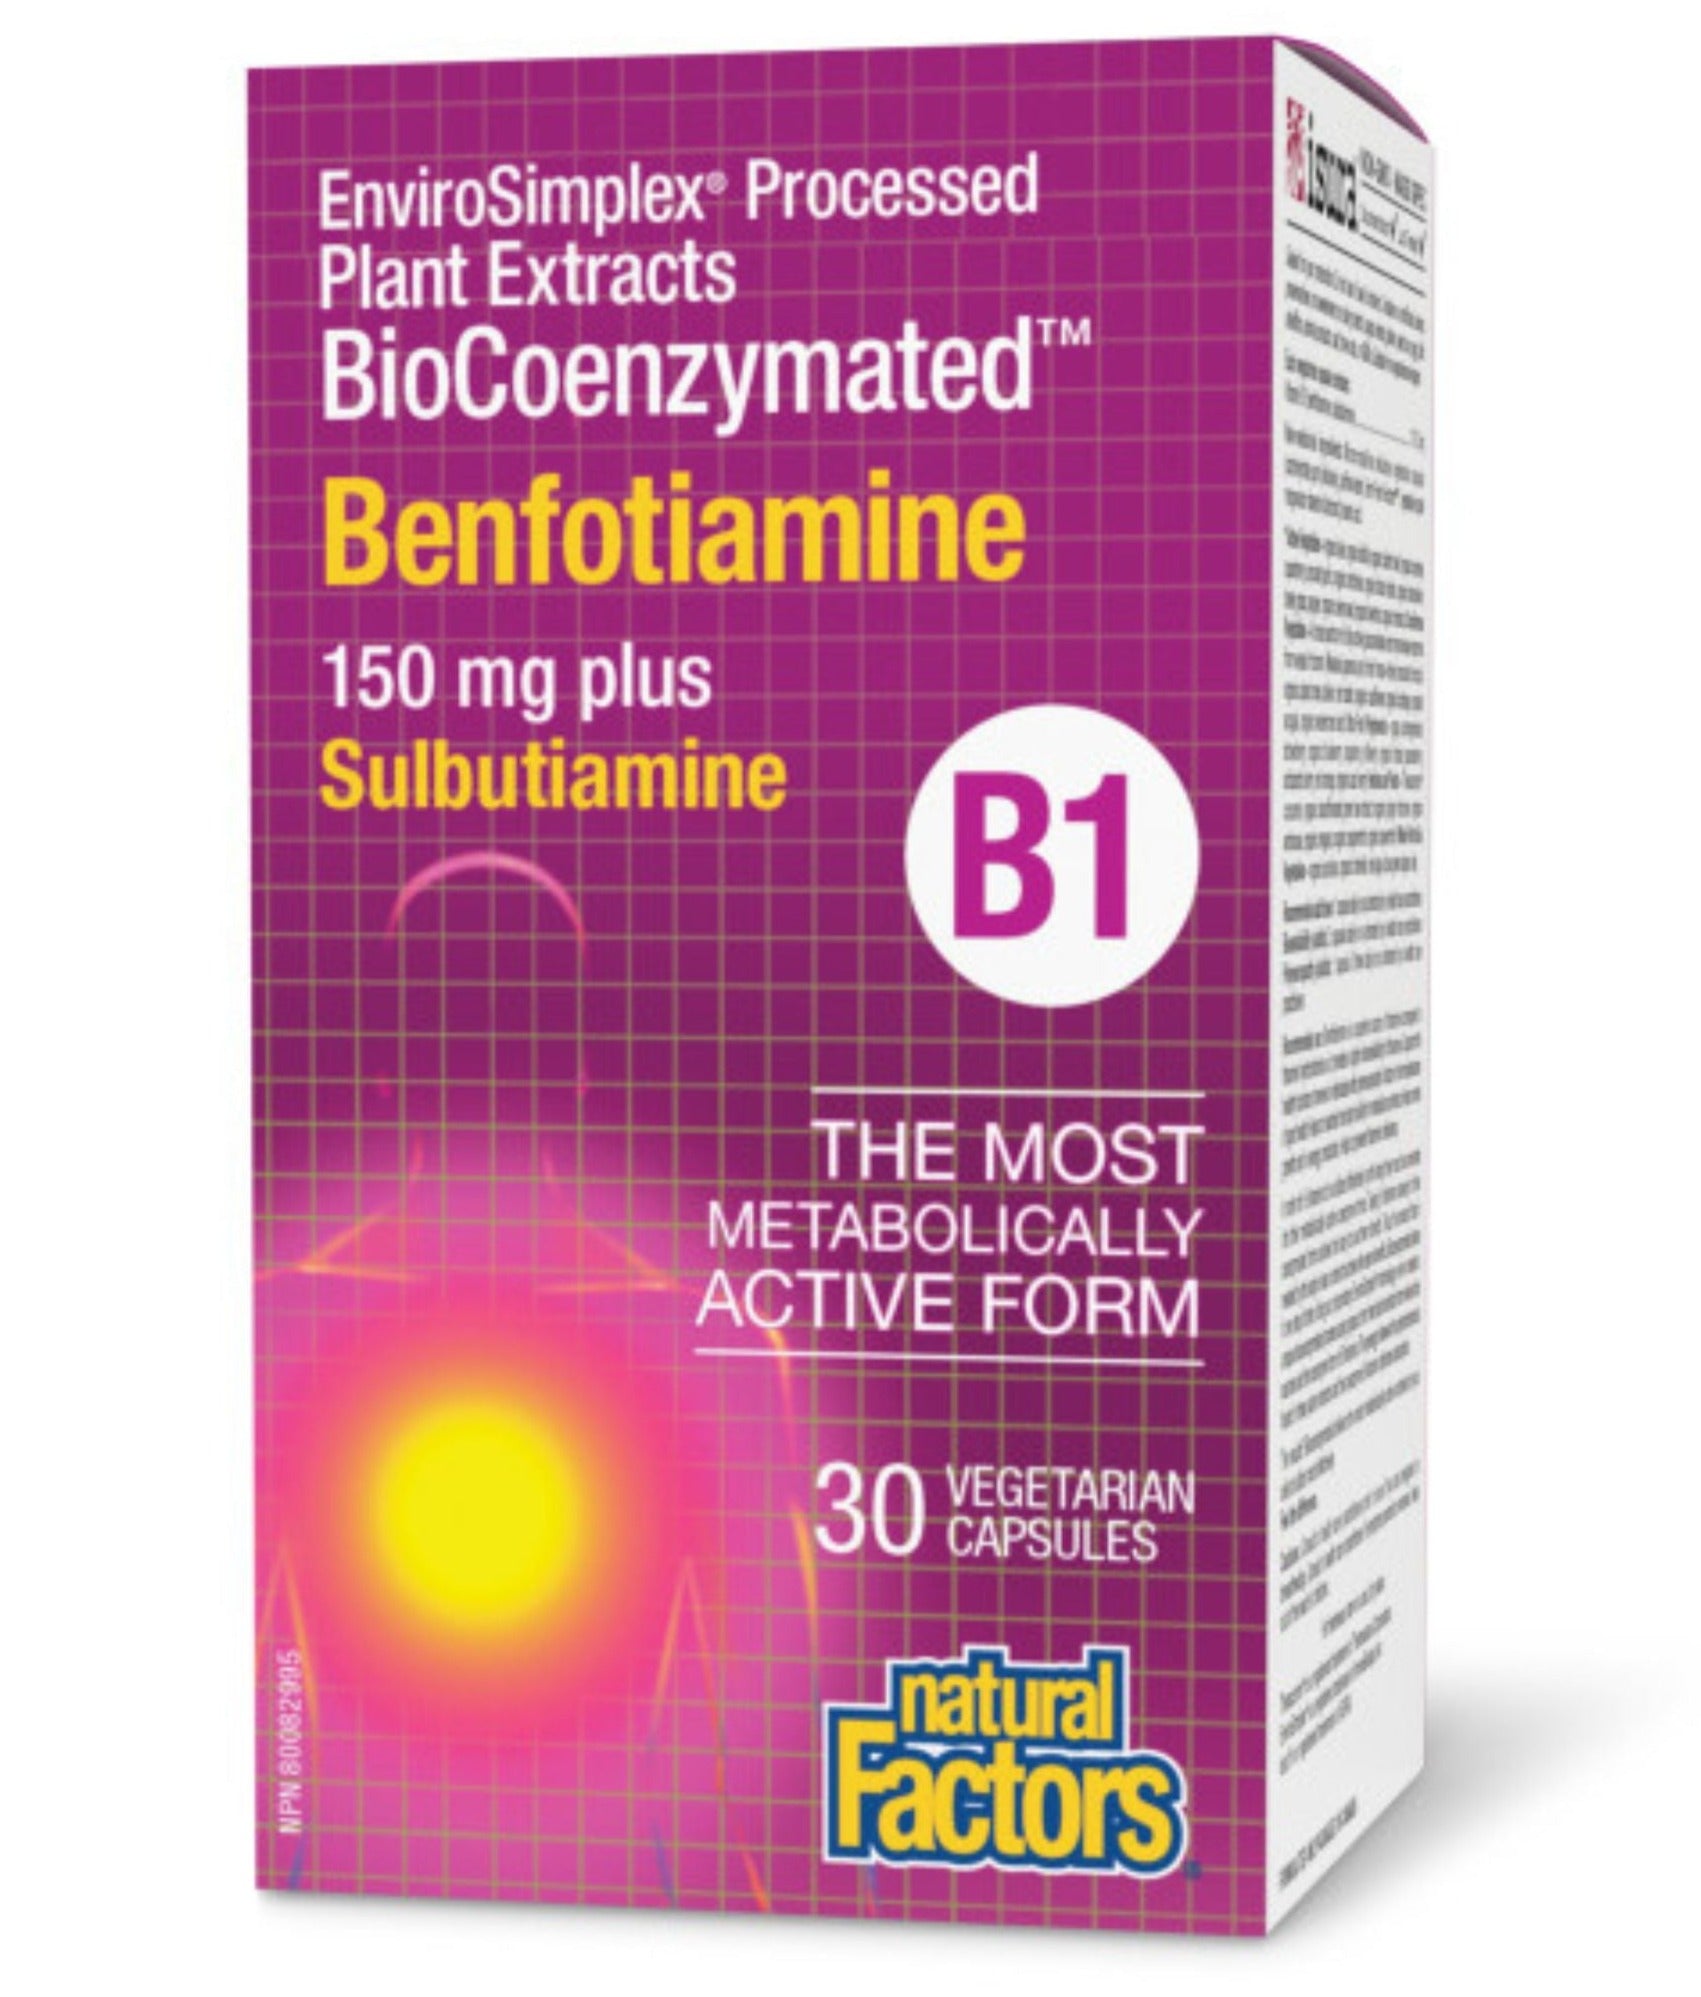 Natural Factors BioCoenzymated Benfotiamine 150mg plus Sulbutiamine - Vitamin B1 supplement - 30 vegetarian capsules, bottle inside of box 